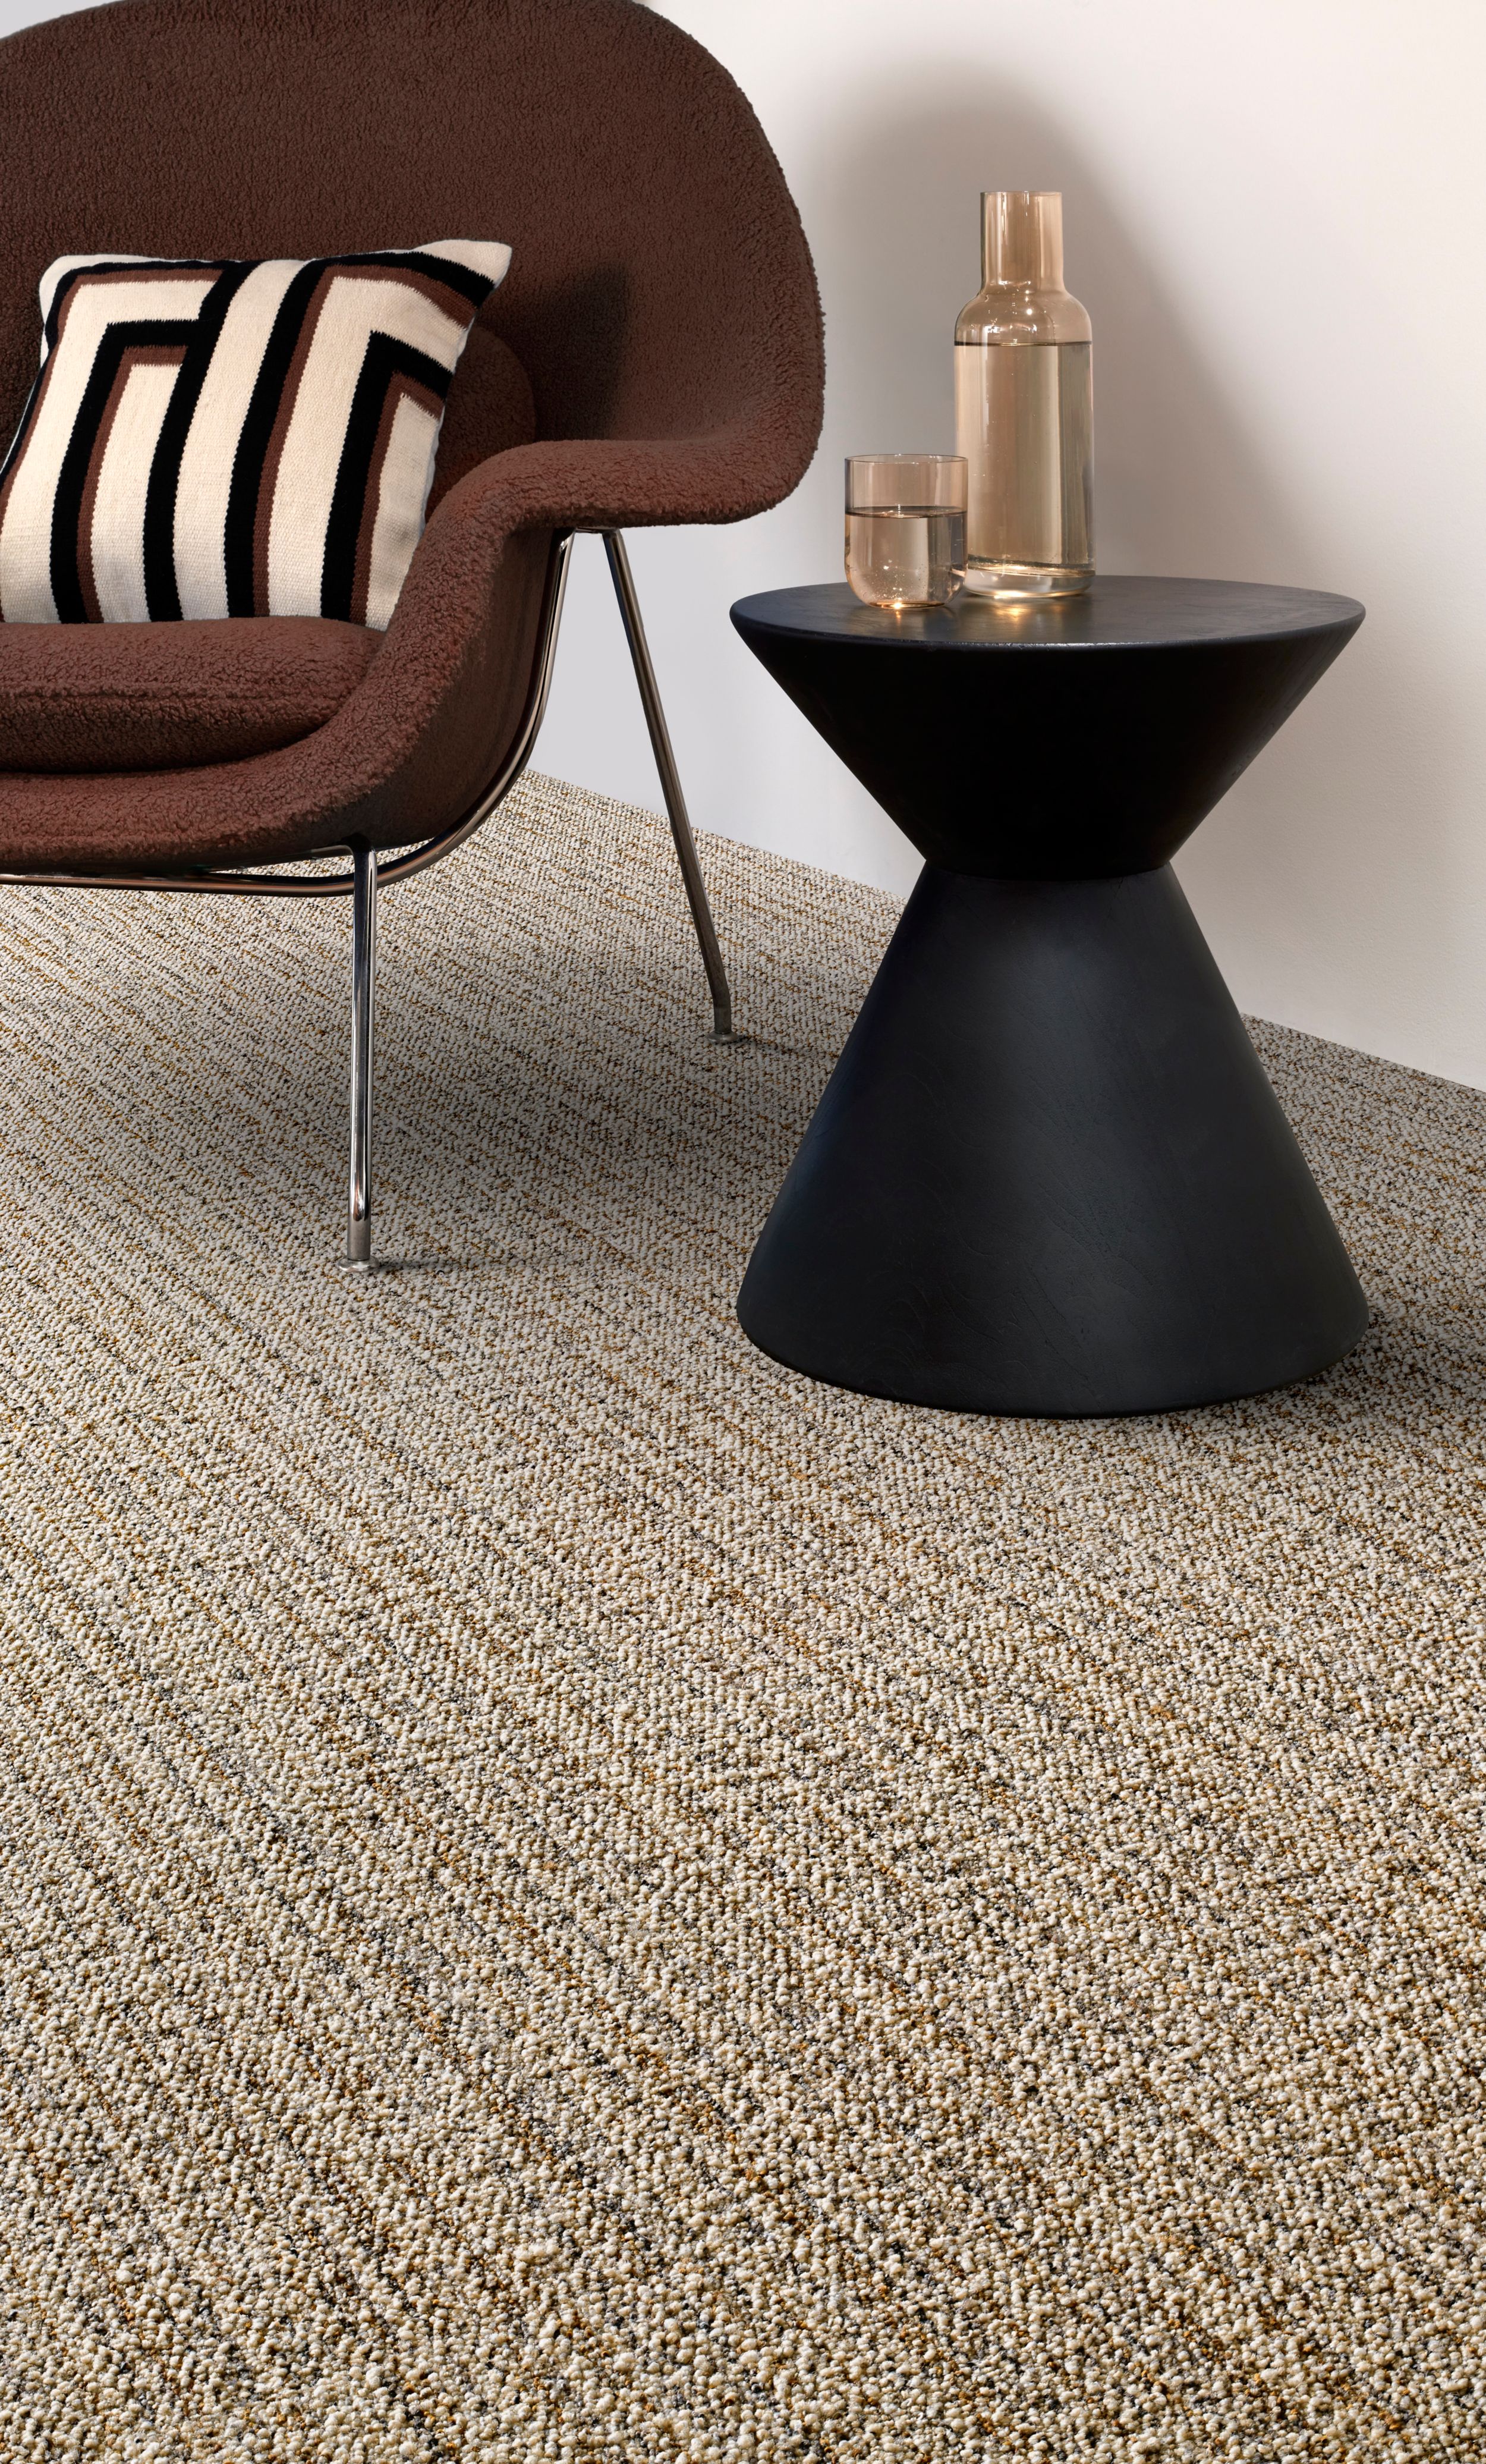 Interface E616 plank carpet tile in corporate lobby or private office número de imagen 2